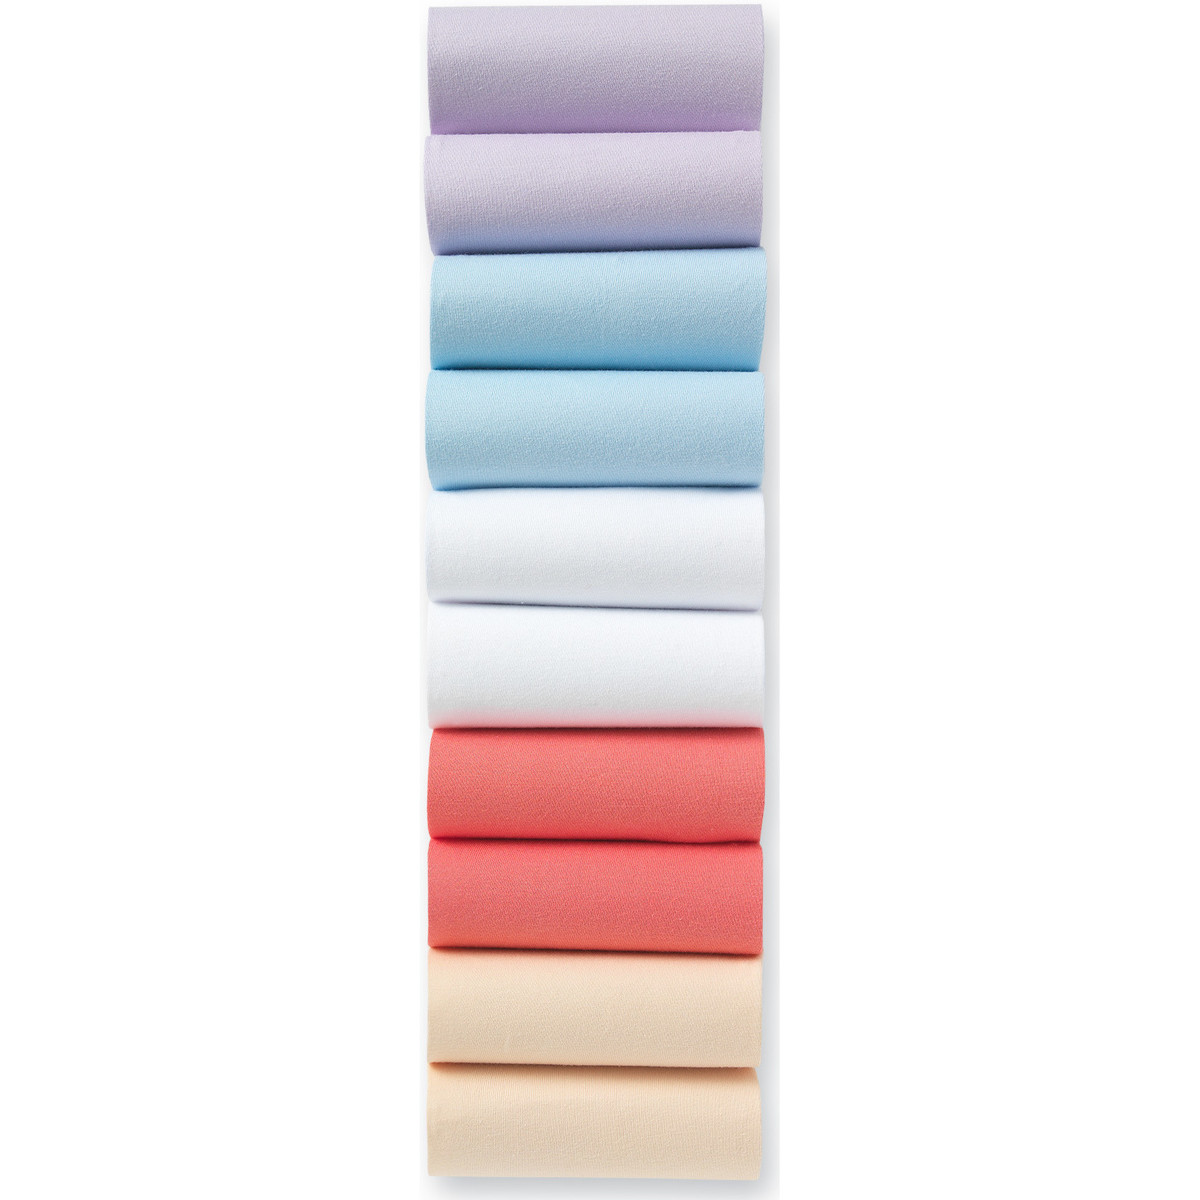 Daxon Multicolore by - Lot de 10 culottes pur coton peigné x3FkGtjw